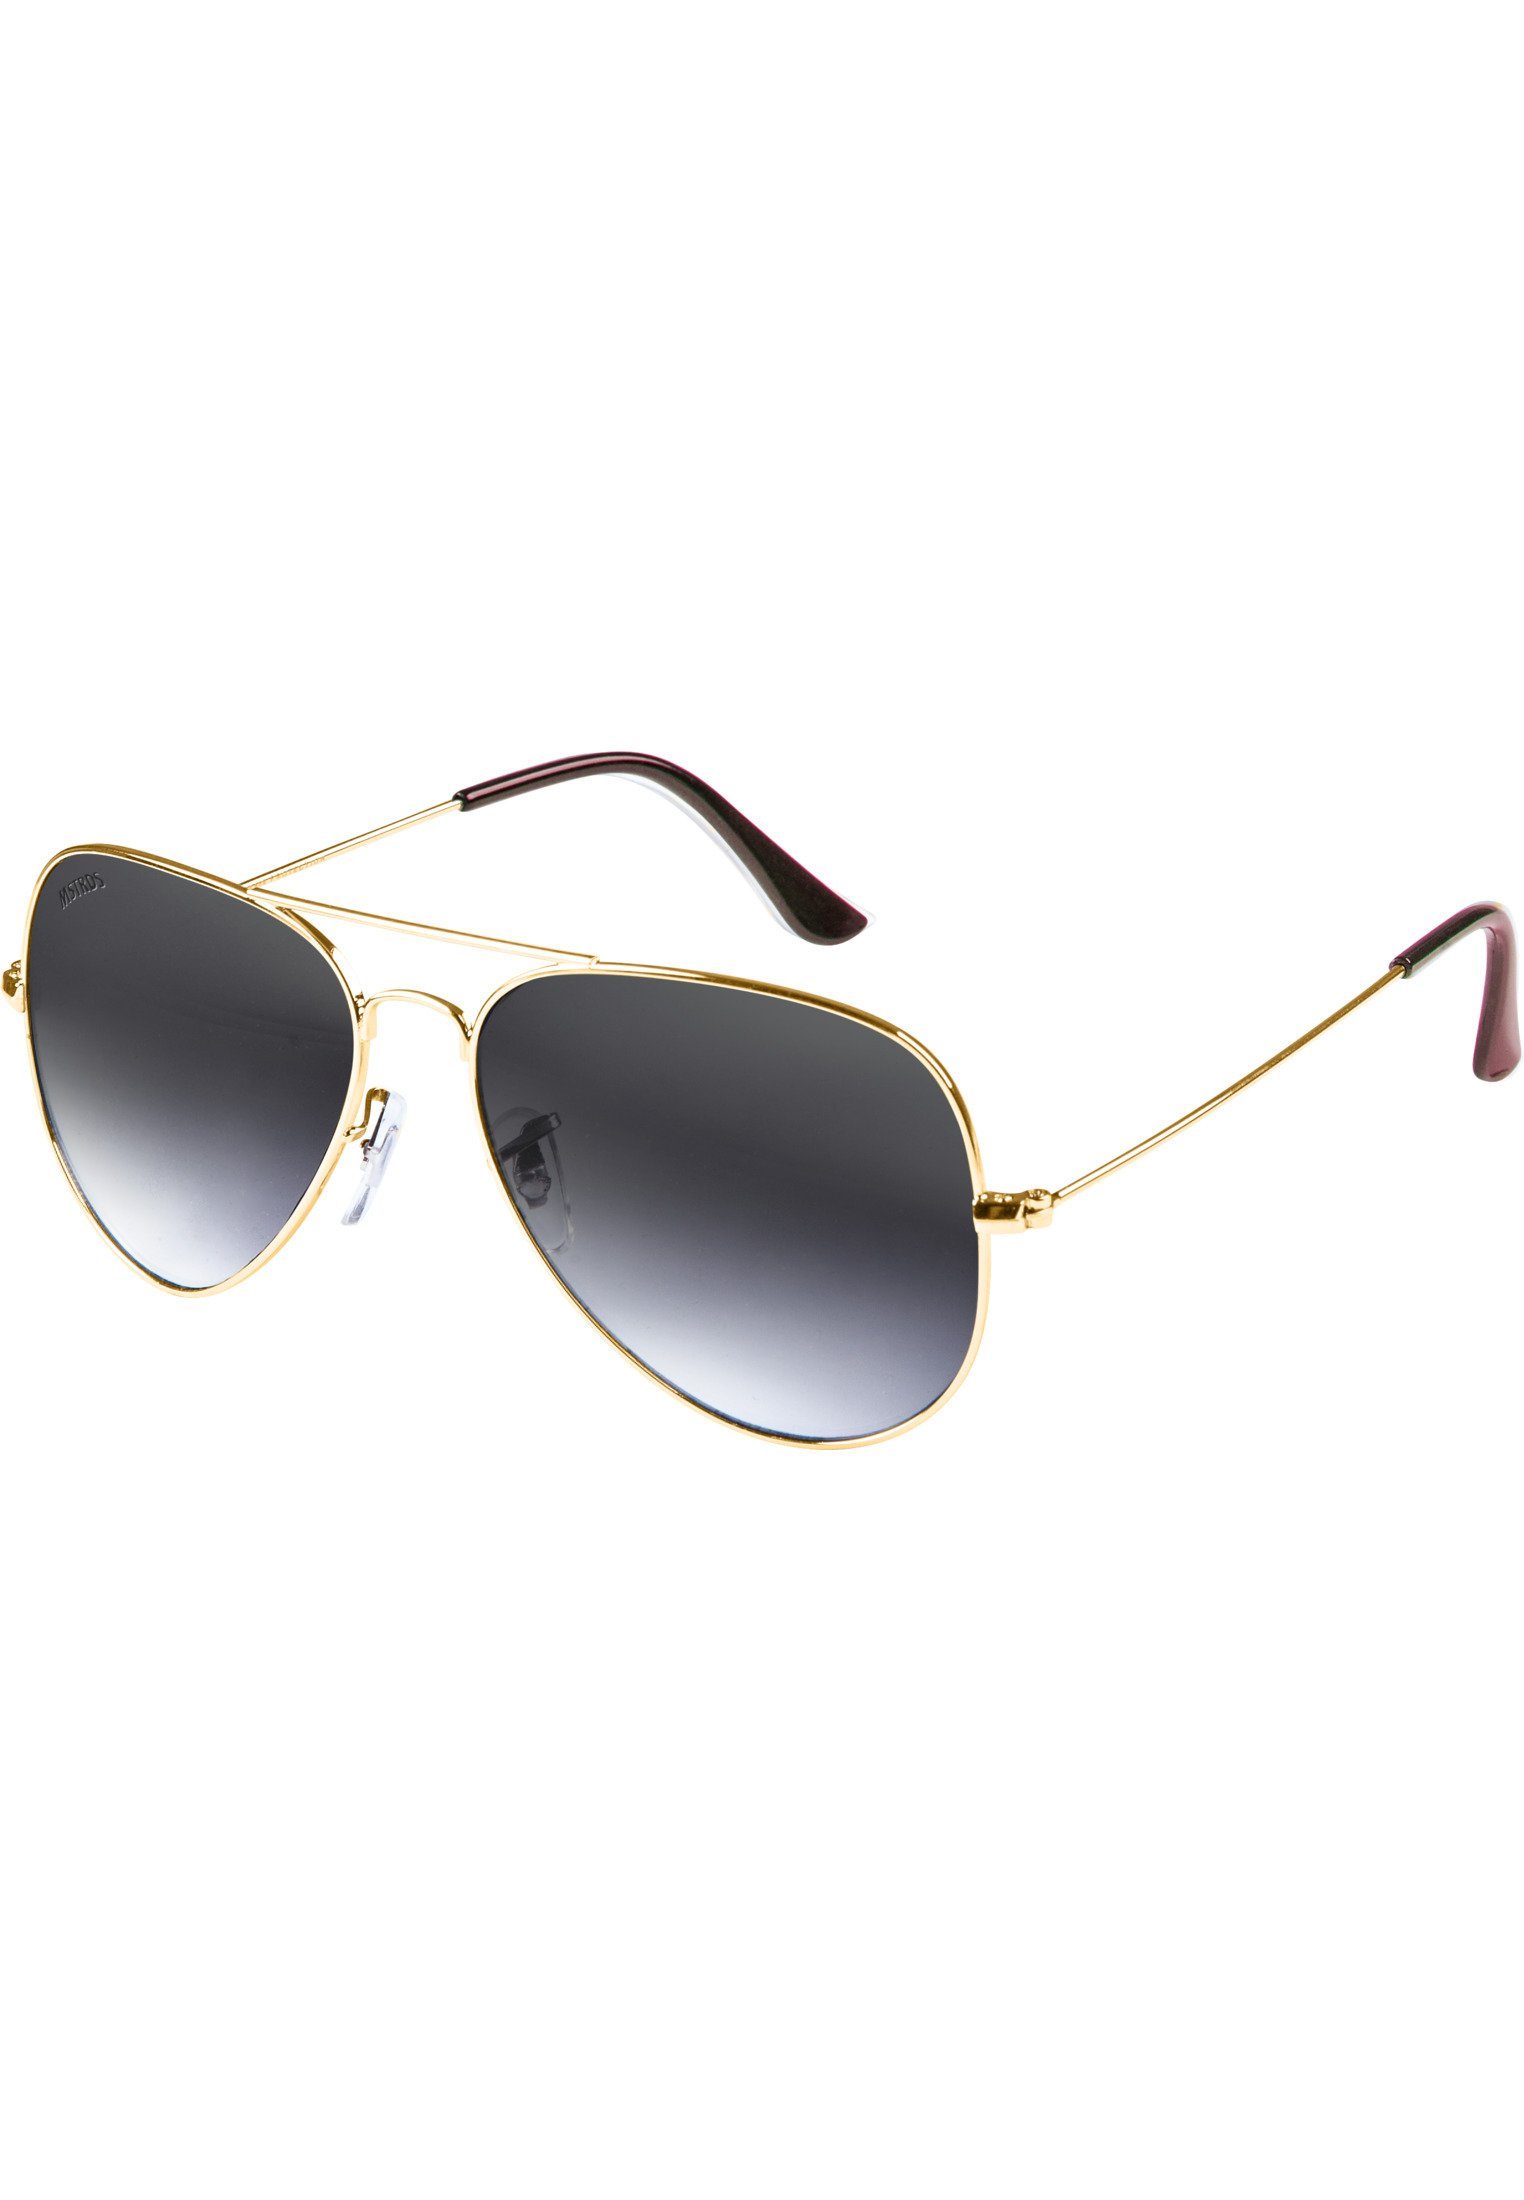 MSTRDS Sonnenbrille Accessoires gold/grey Sunglasses PureAv